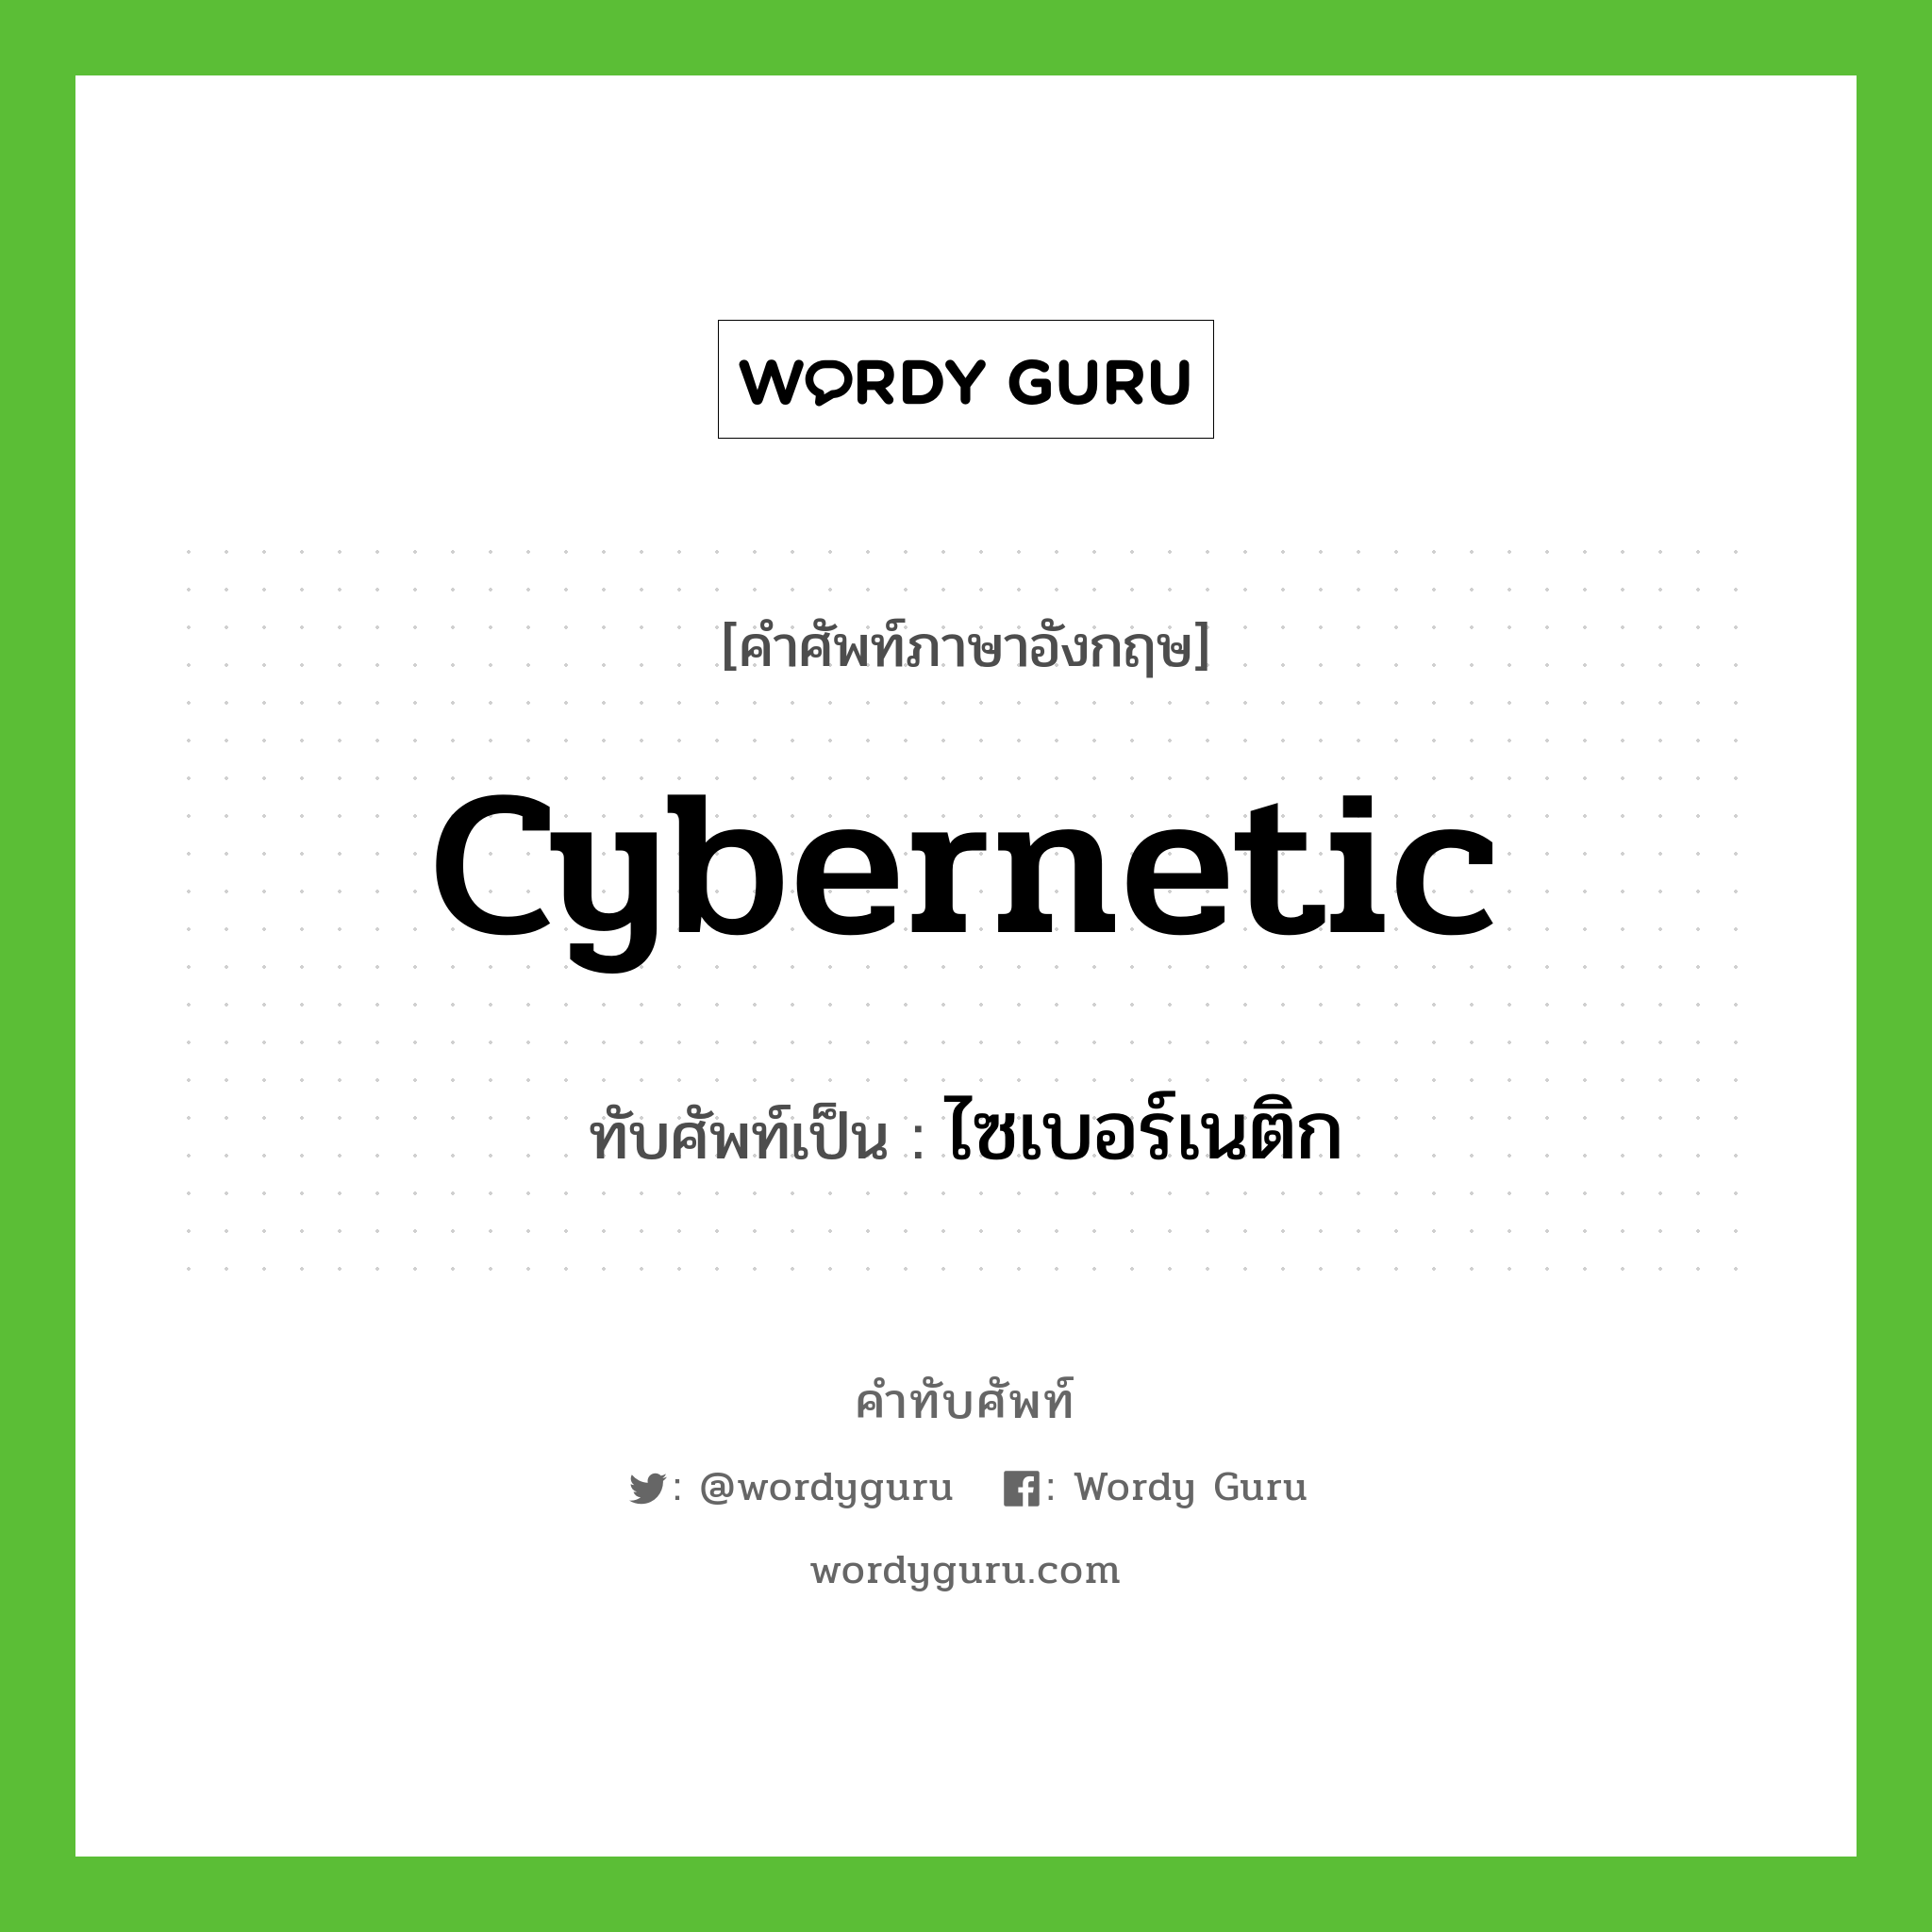 cybernetic เขียนเป็นคำไทยว่าอะไร?, คำศัพท์ภาษาอังกฤษ cybernetic ทับศัพท์เป็น ไซเบอร์เนติก